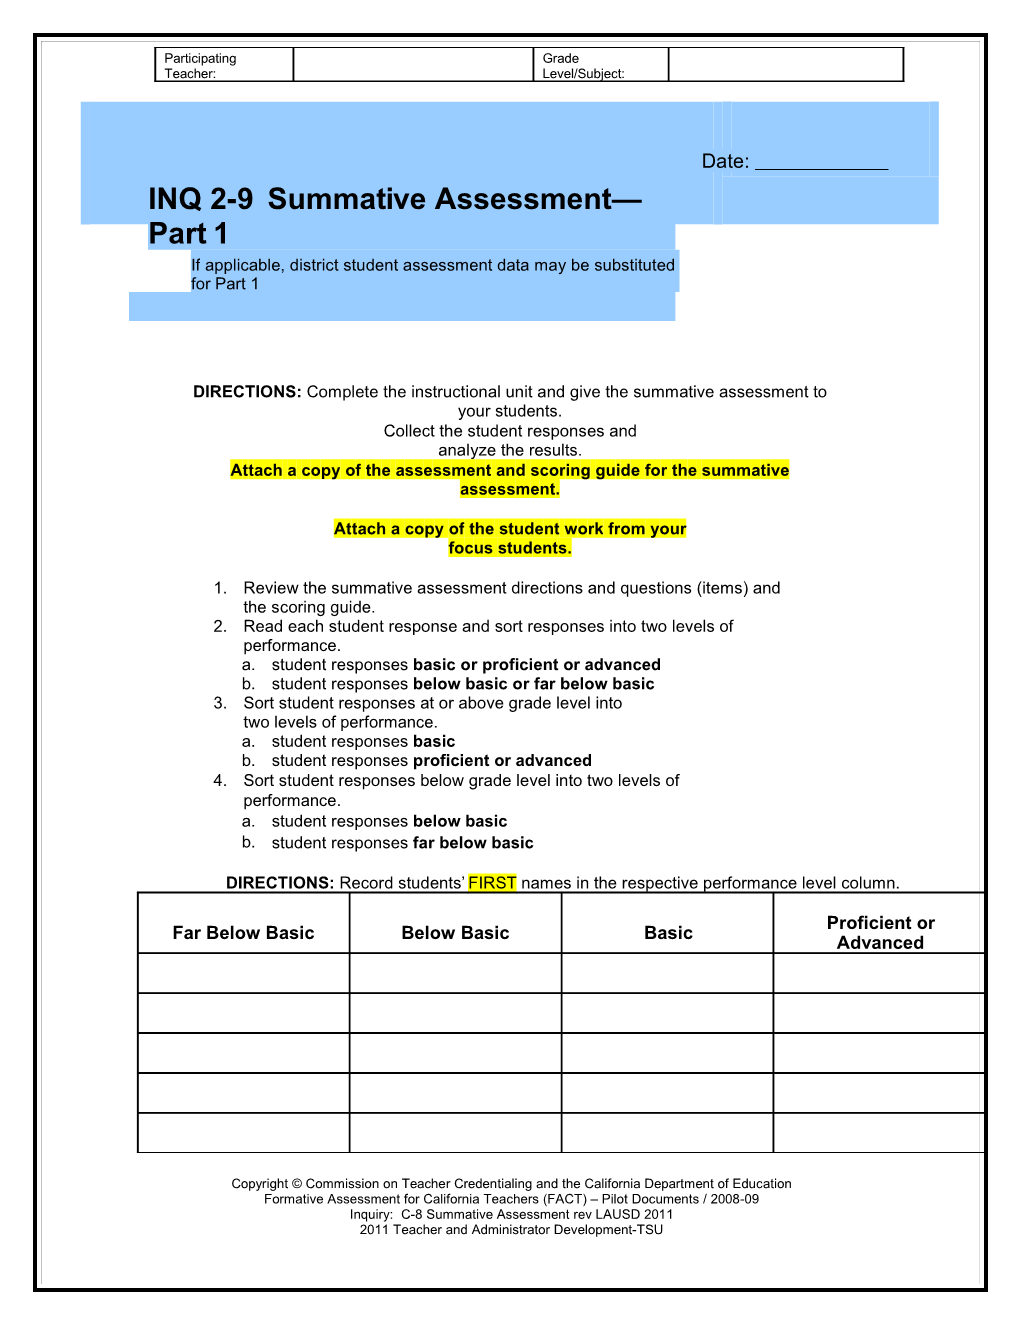 INQ 2-9 Summative Assessment Part 1